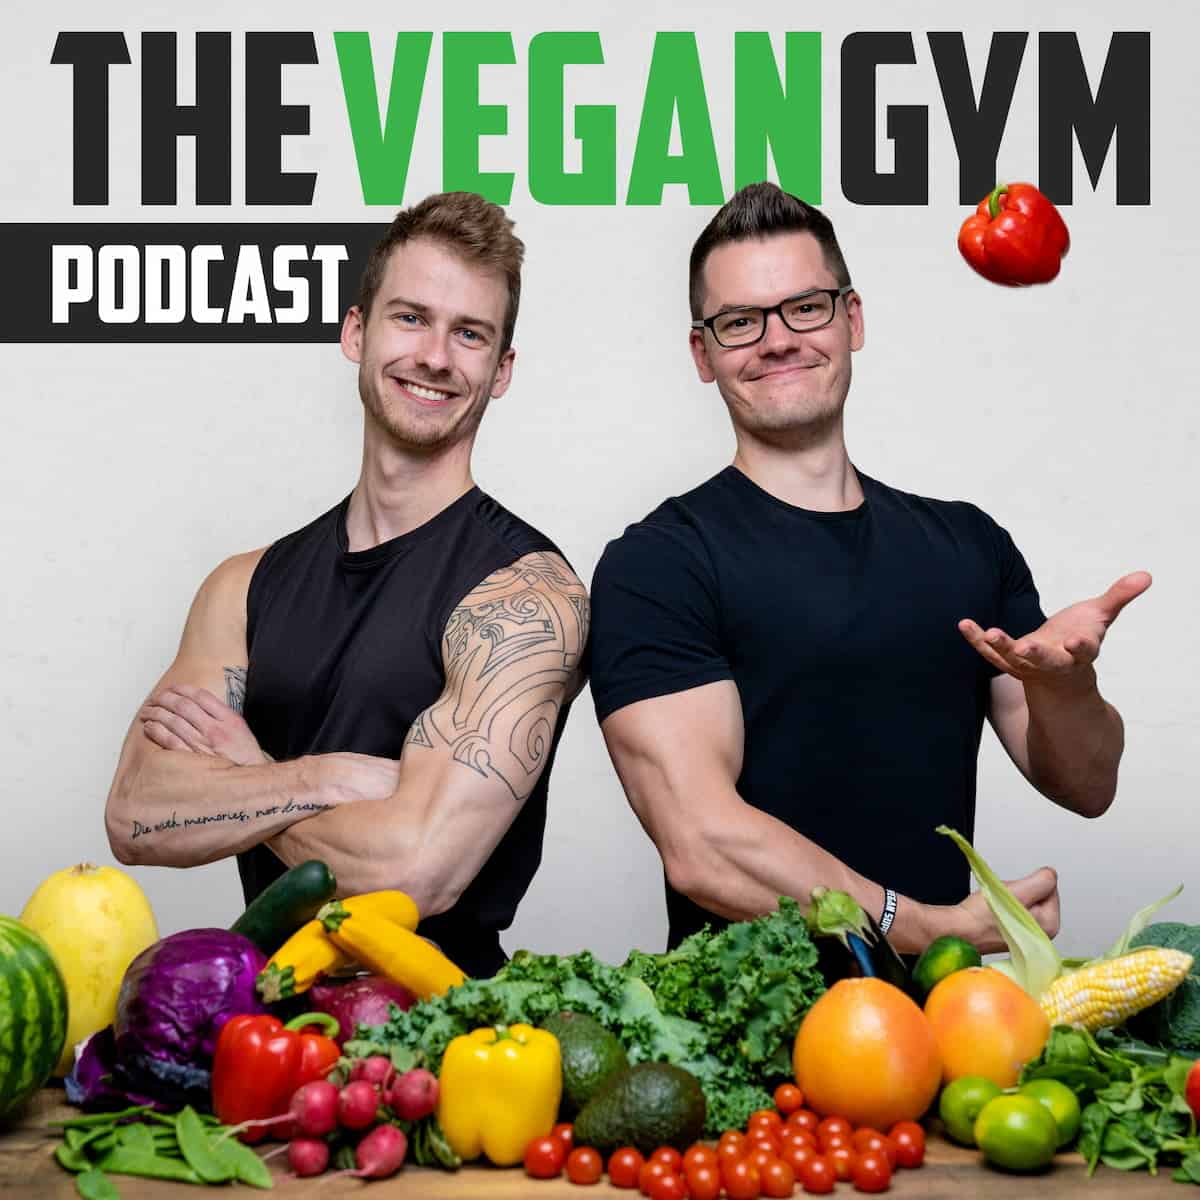 The Vegan Gym Podcast cover art.